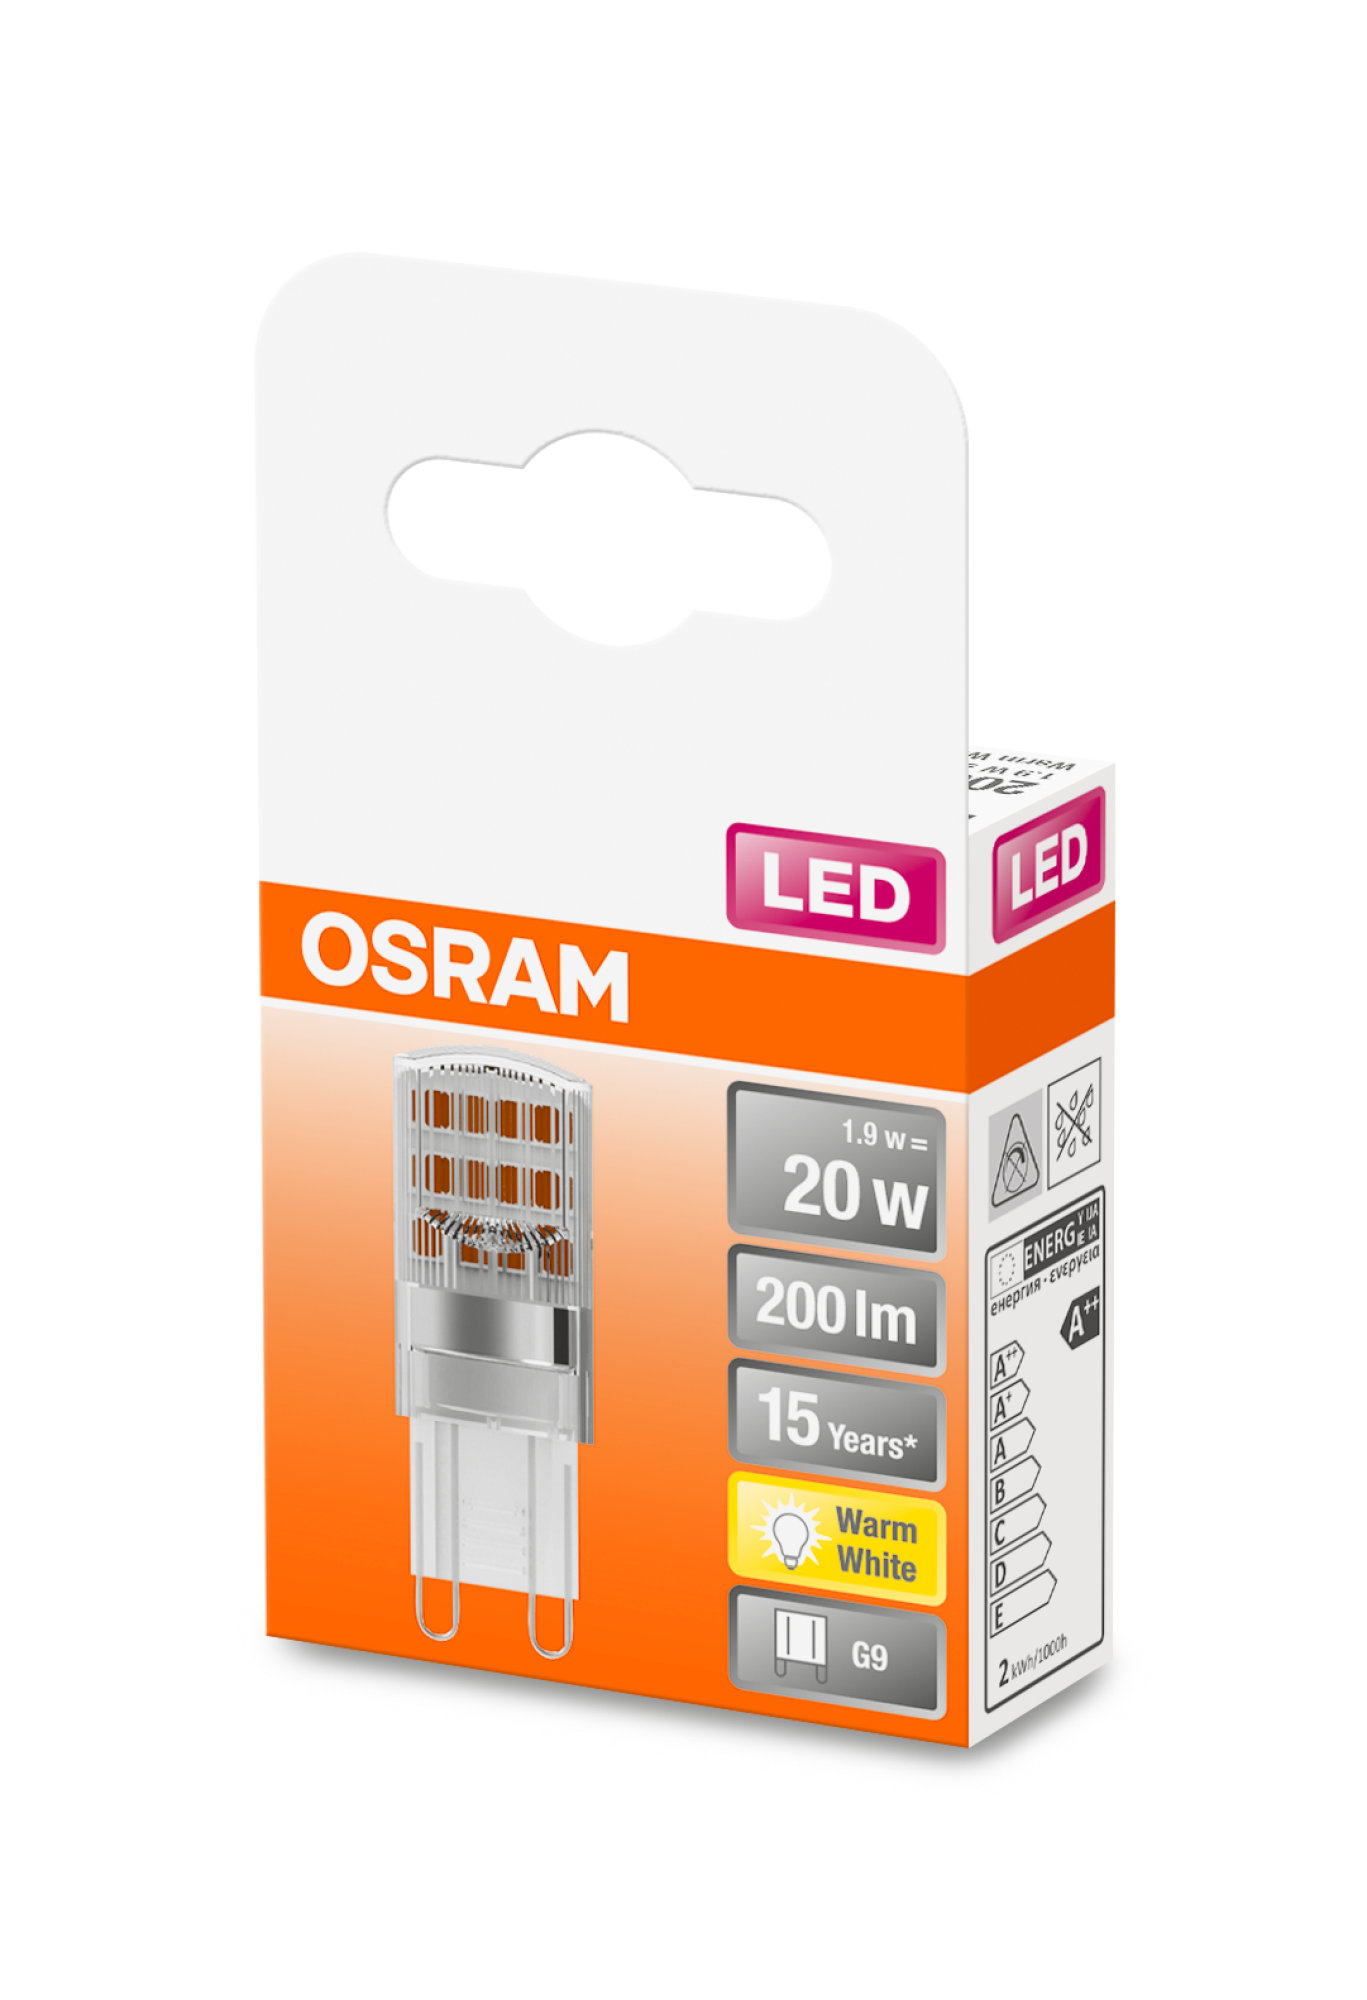 Bec Osram LED STAR PIN 20 clar 1,9W 827 G9 200lm 2700K